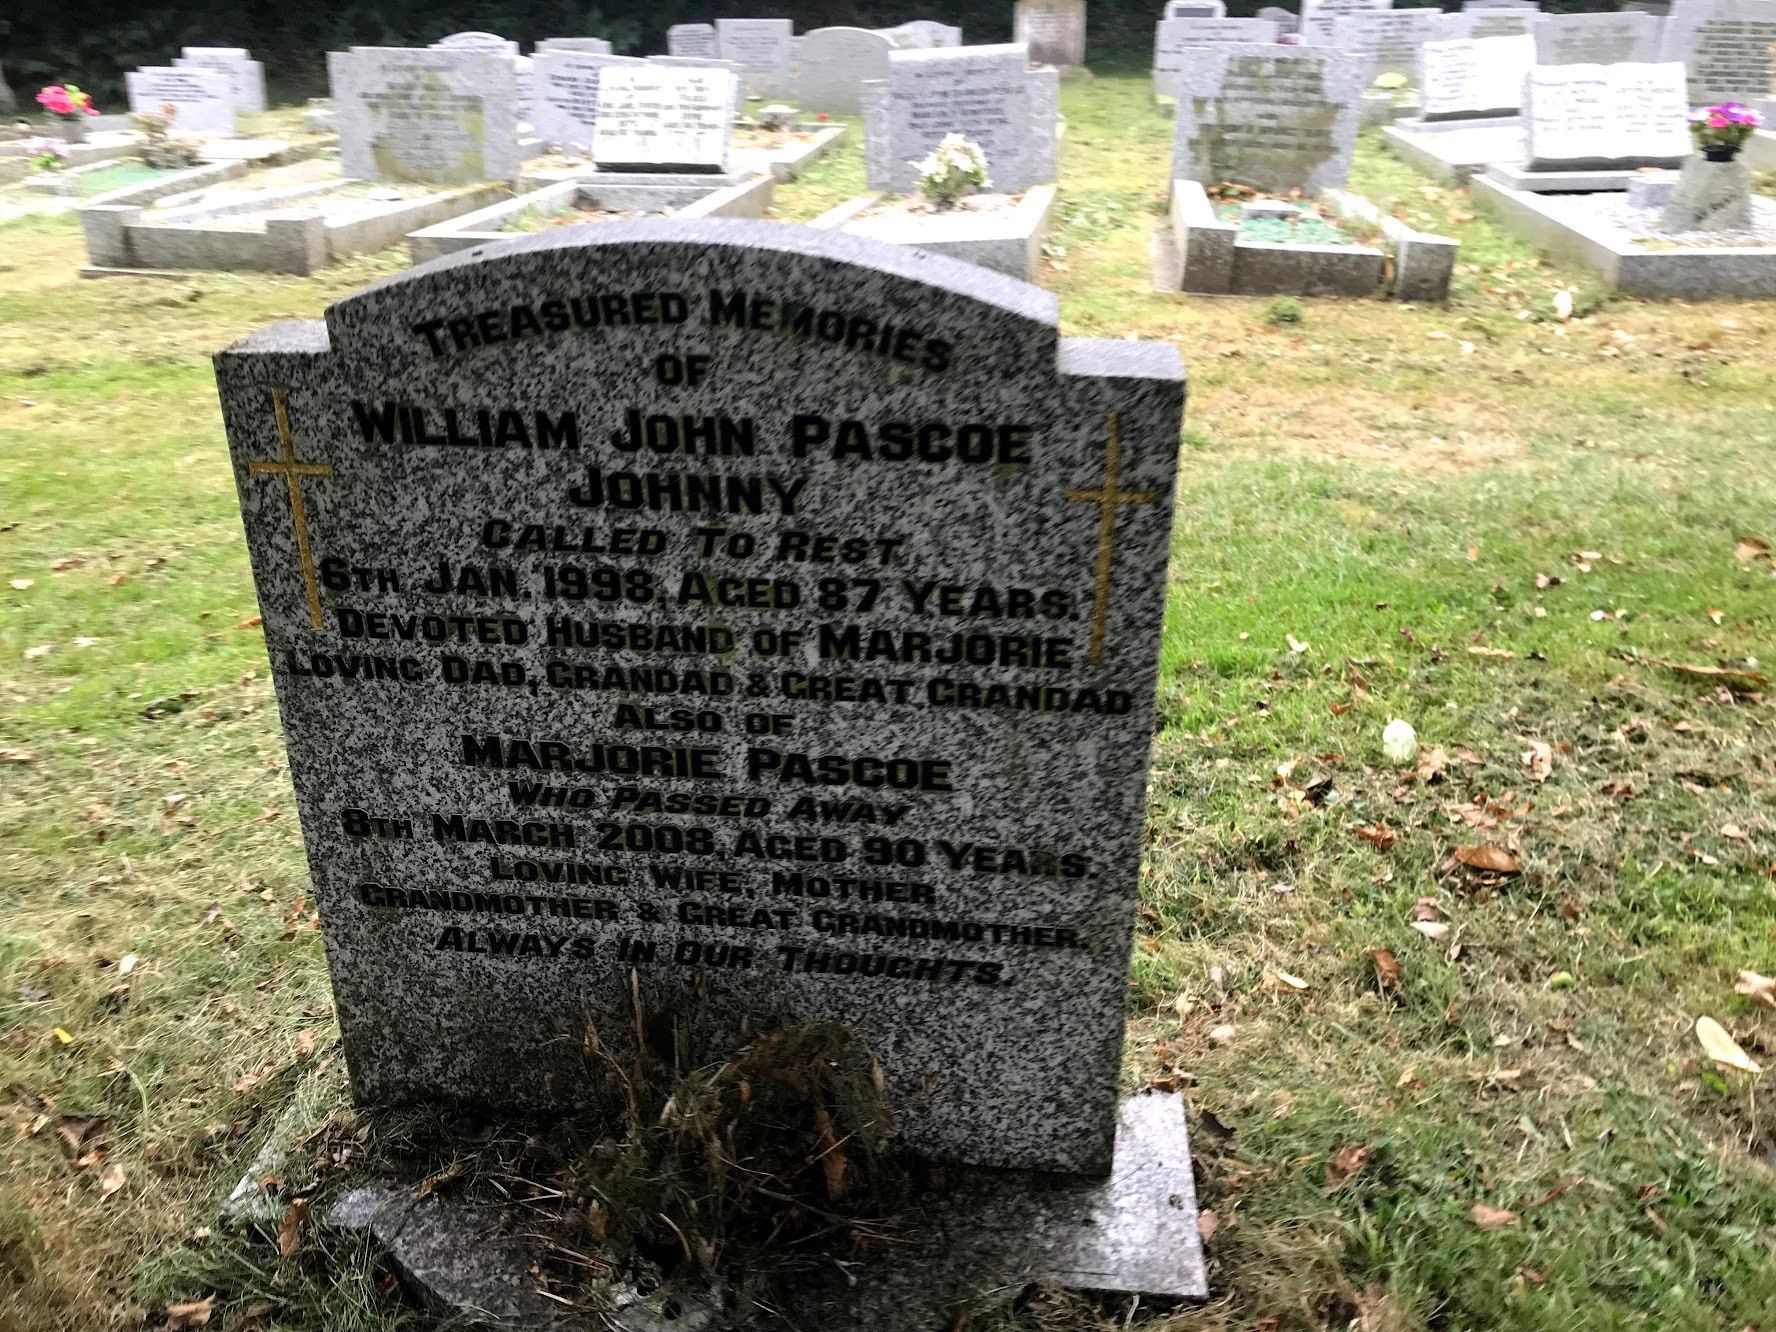 John Pascoe memorial